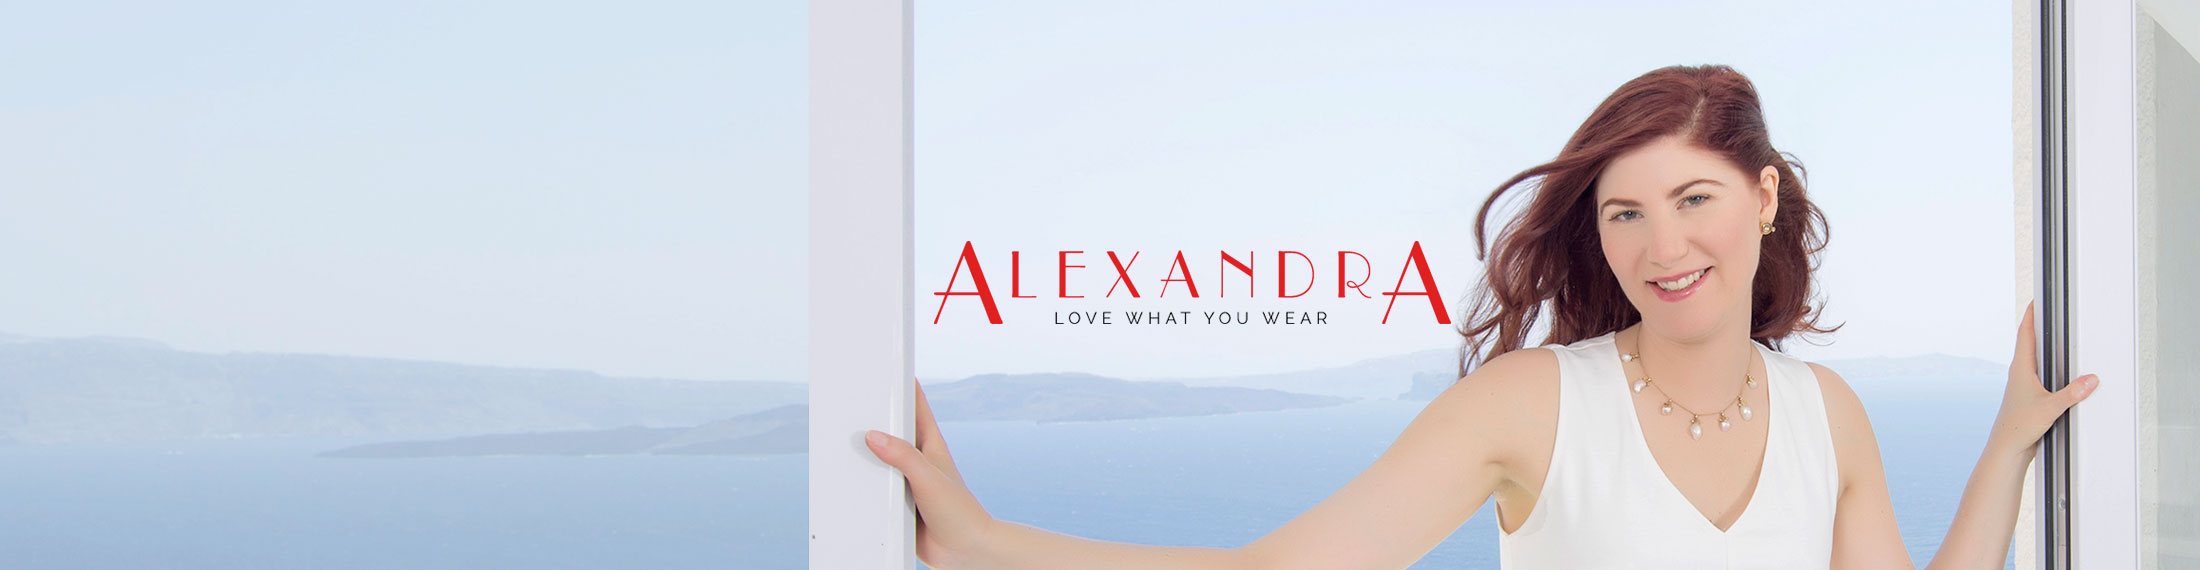 alexandra stylist banner